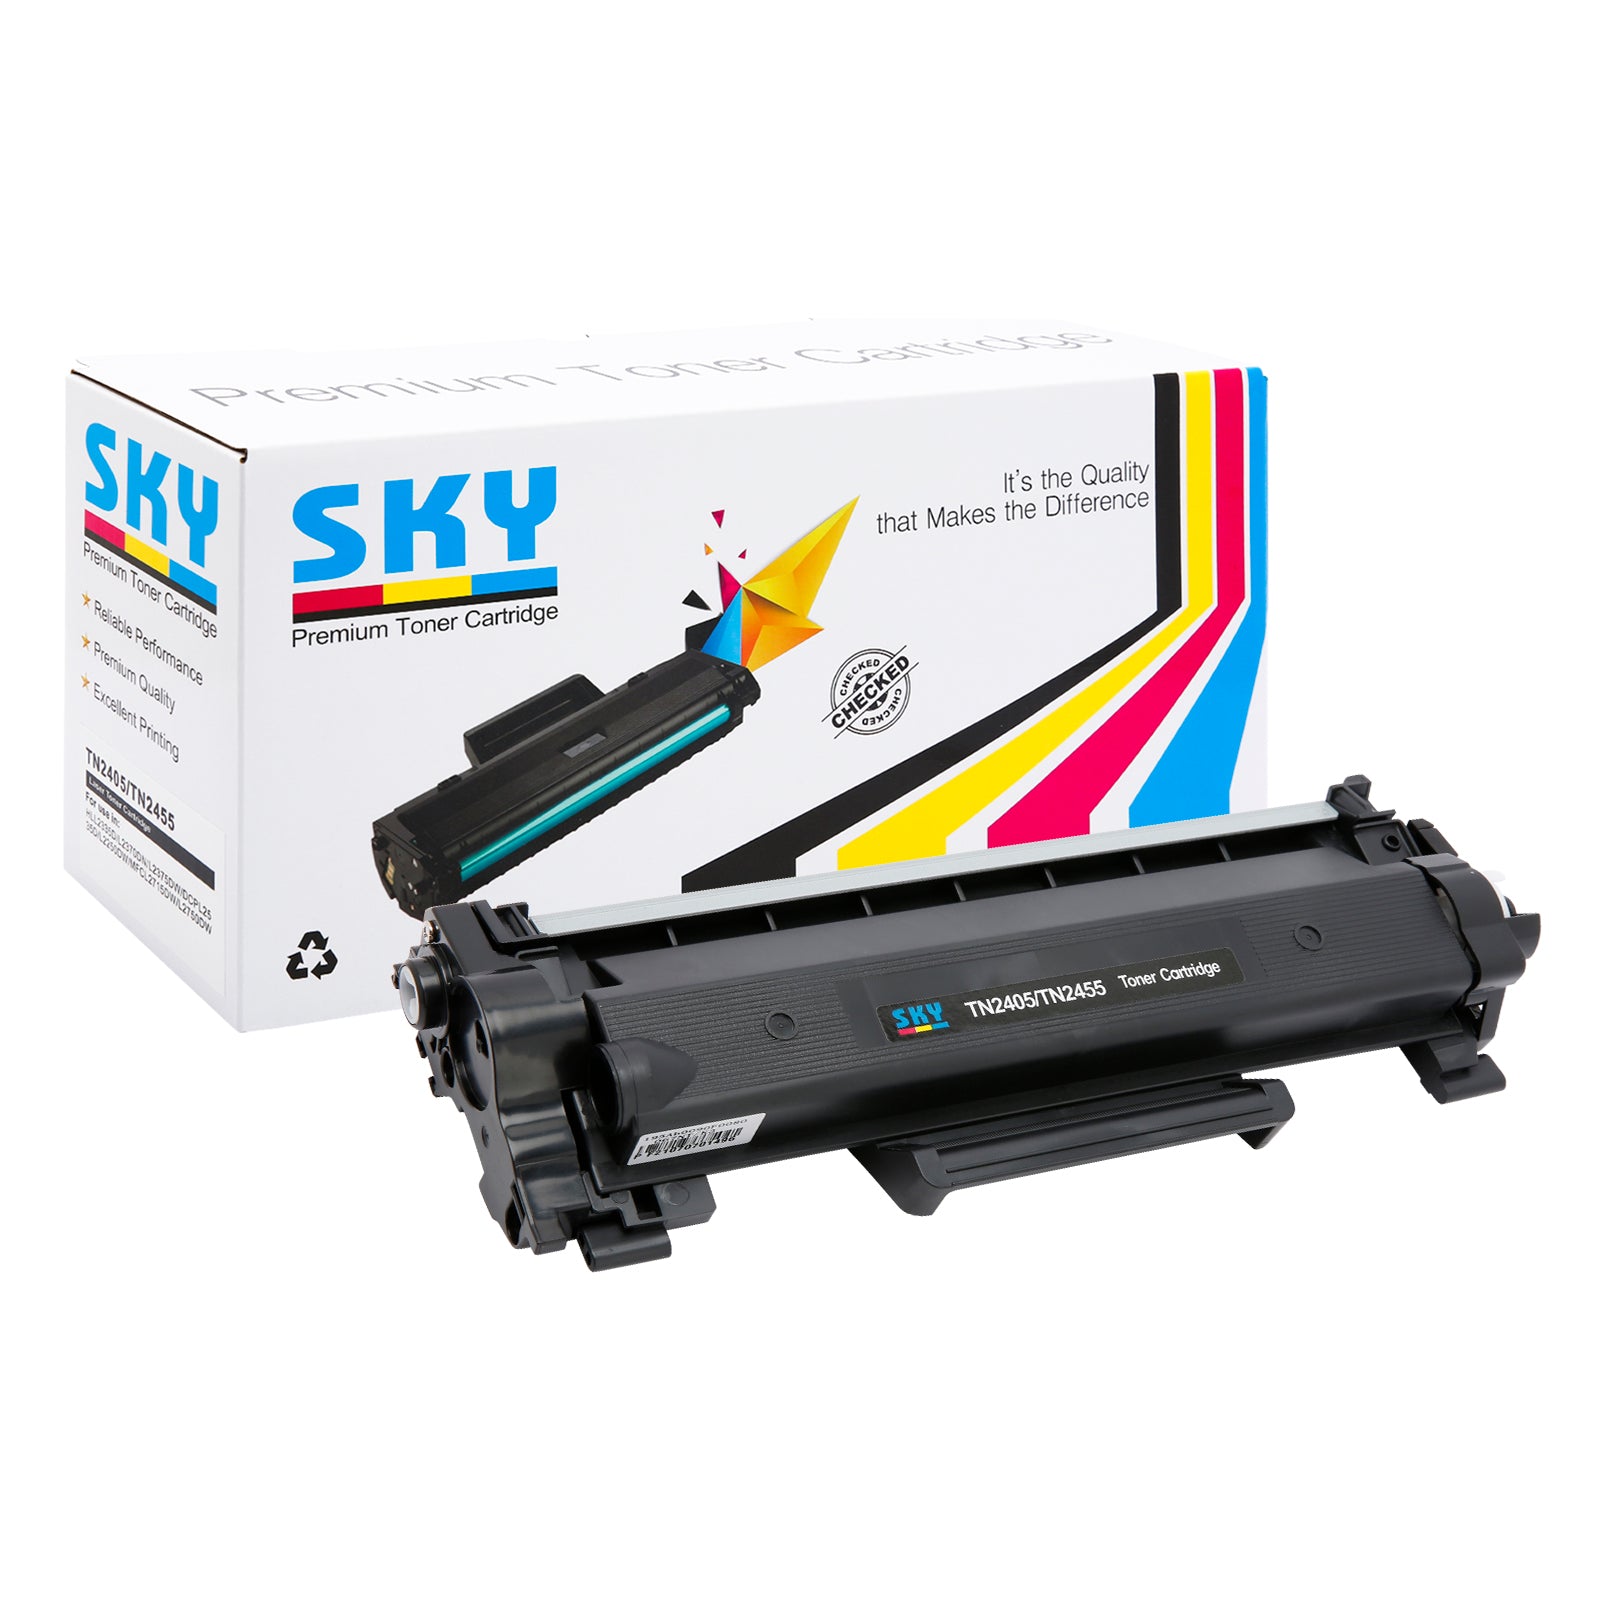 SKY TN-2405 Toner Cartridge for Brother  HL-2335D, L2370DN  DCP-L2535D and DCP-L2550DW